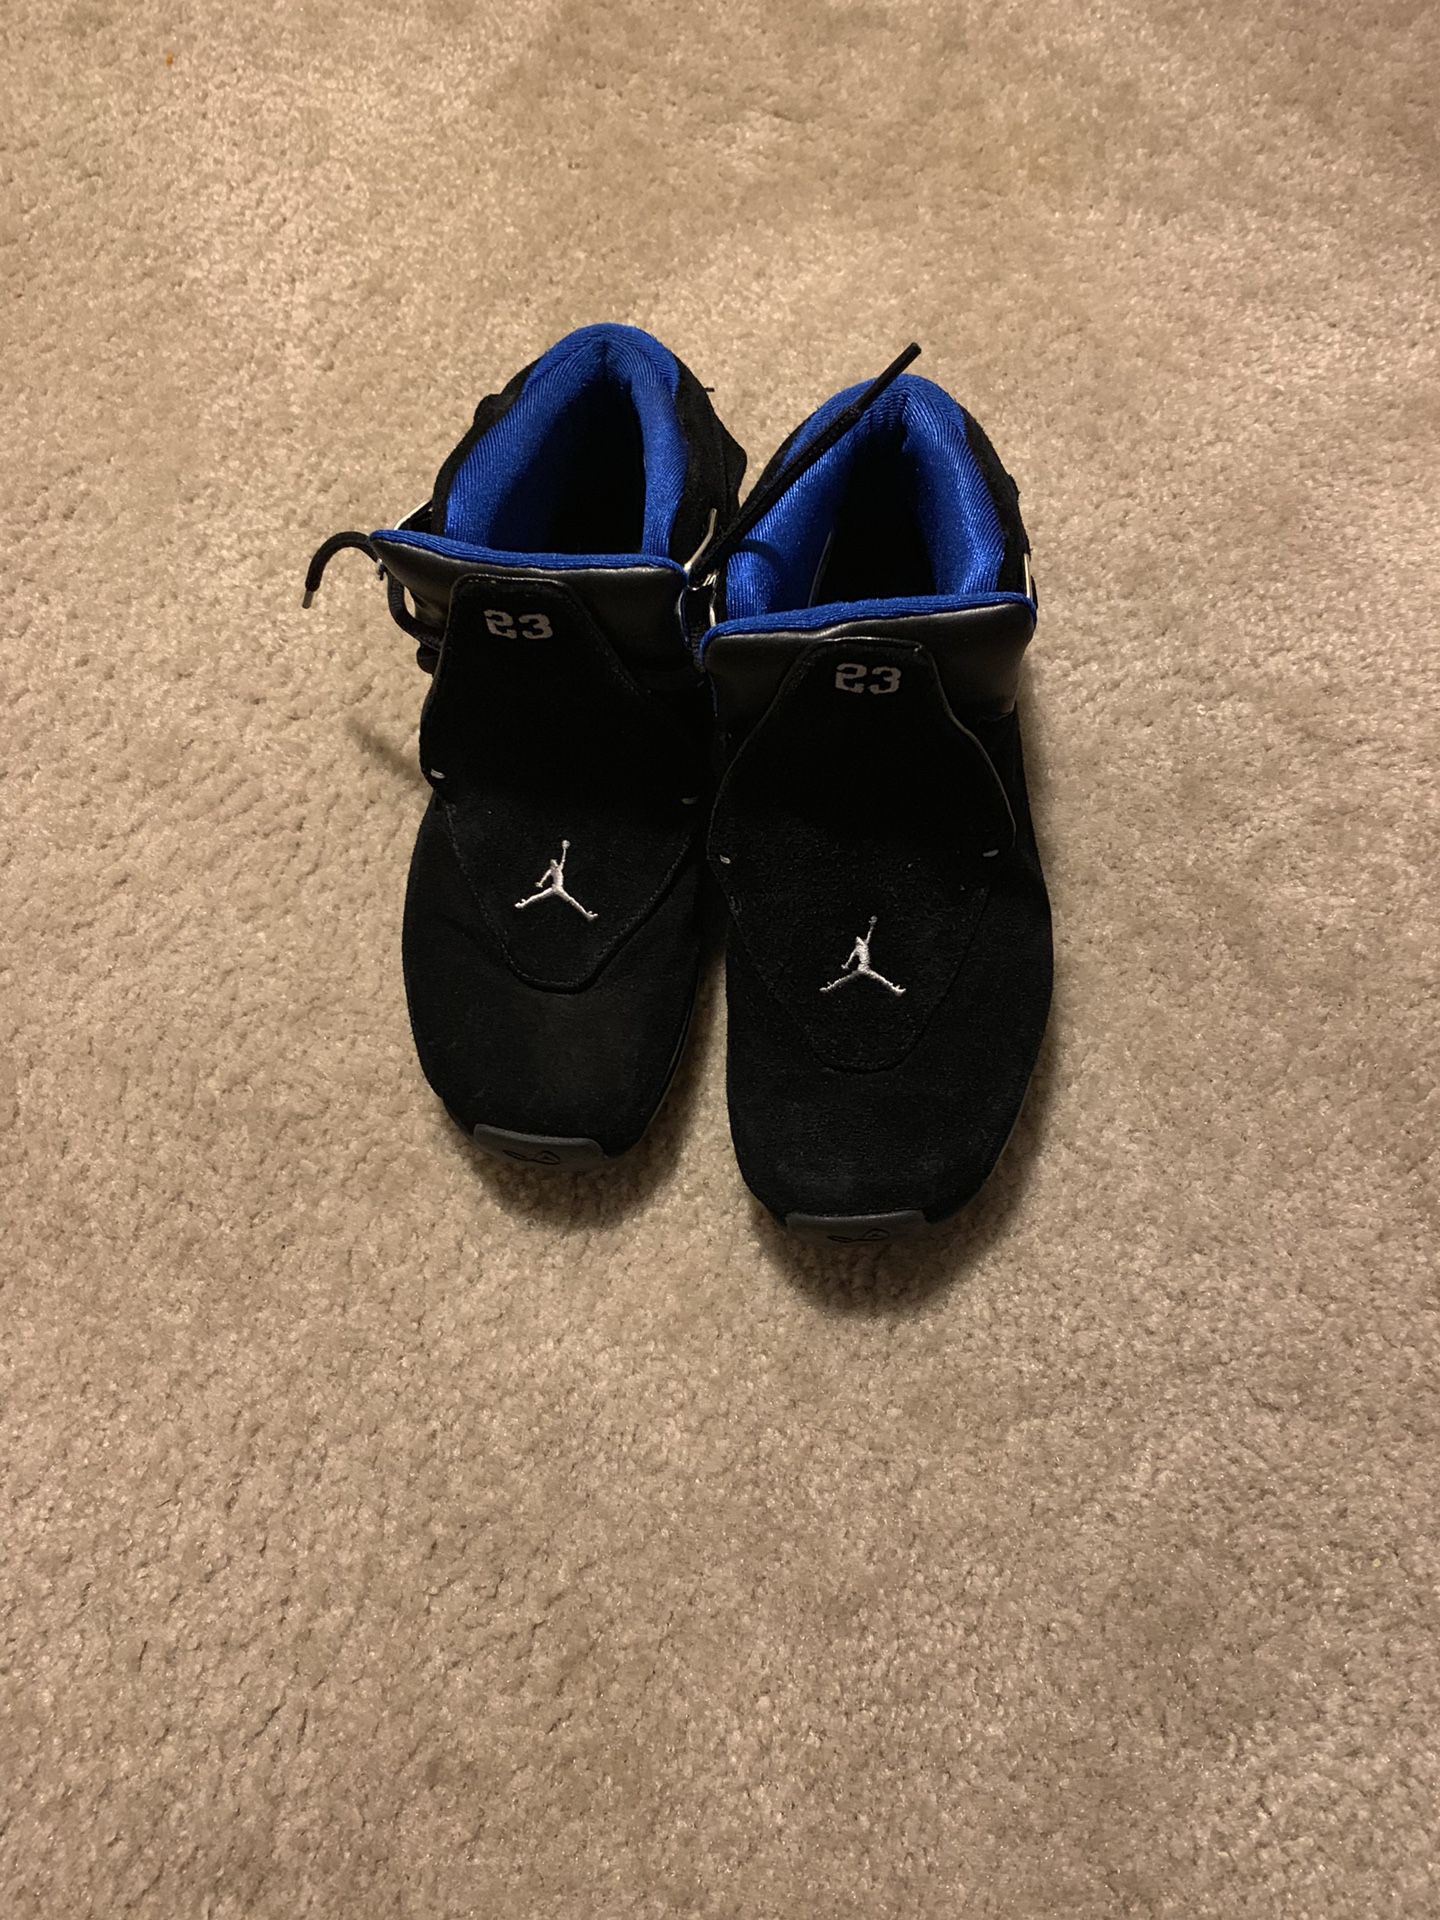 Air Jordan Retro 18s Black Royal Blue size 6 Boys